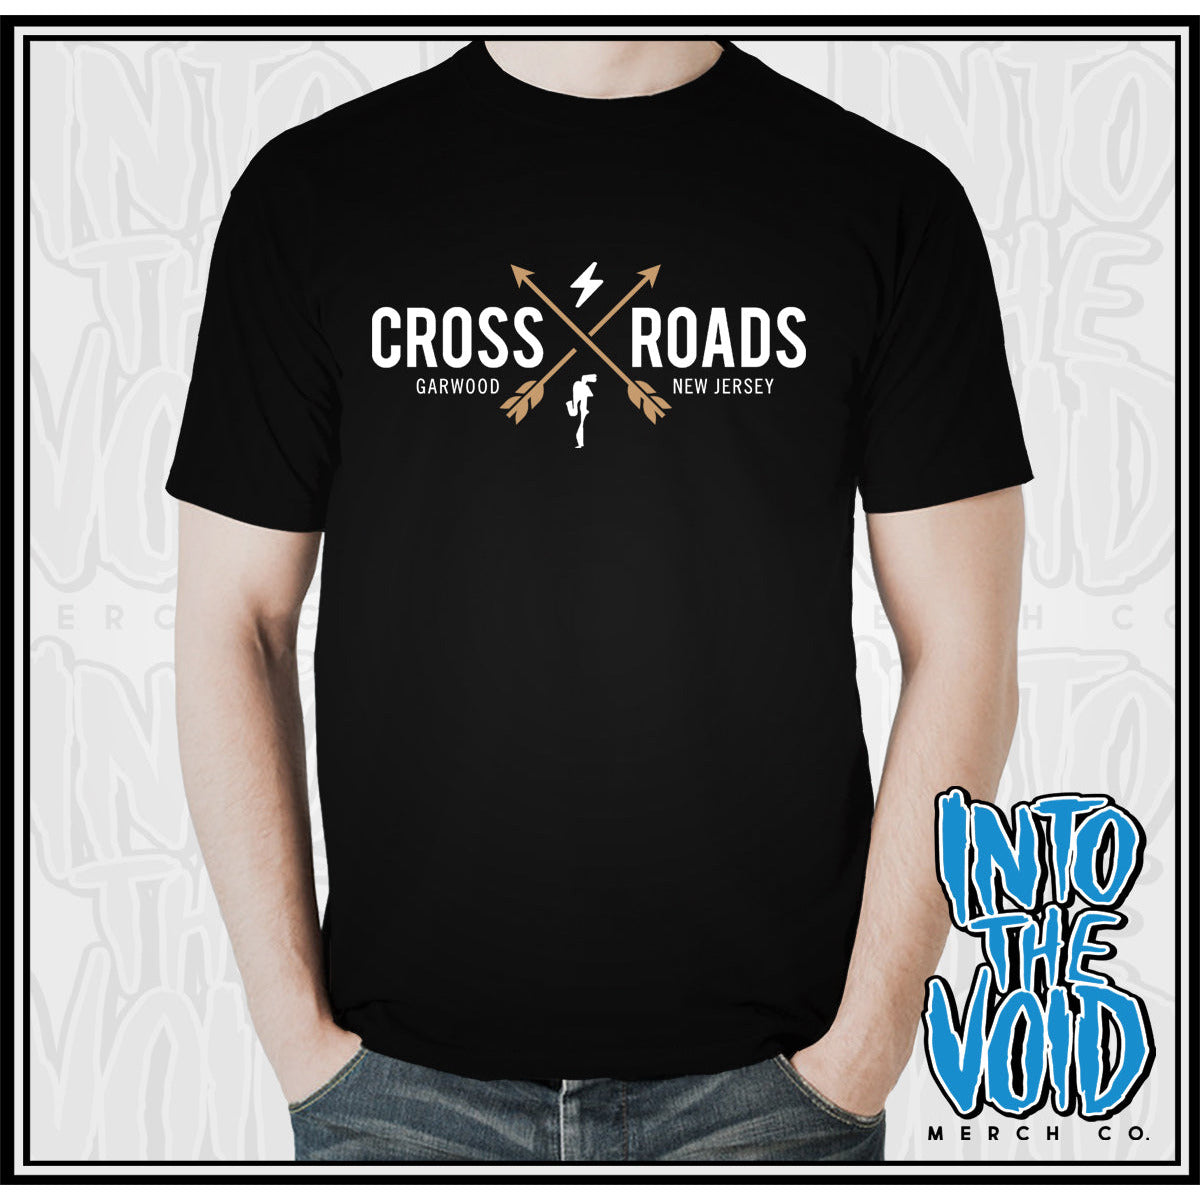 CROSSROADS - LOGO - Men's Black Short Sleeve T-Shirt - INTO THE VOID Merch Co.